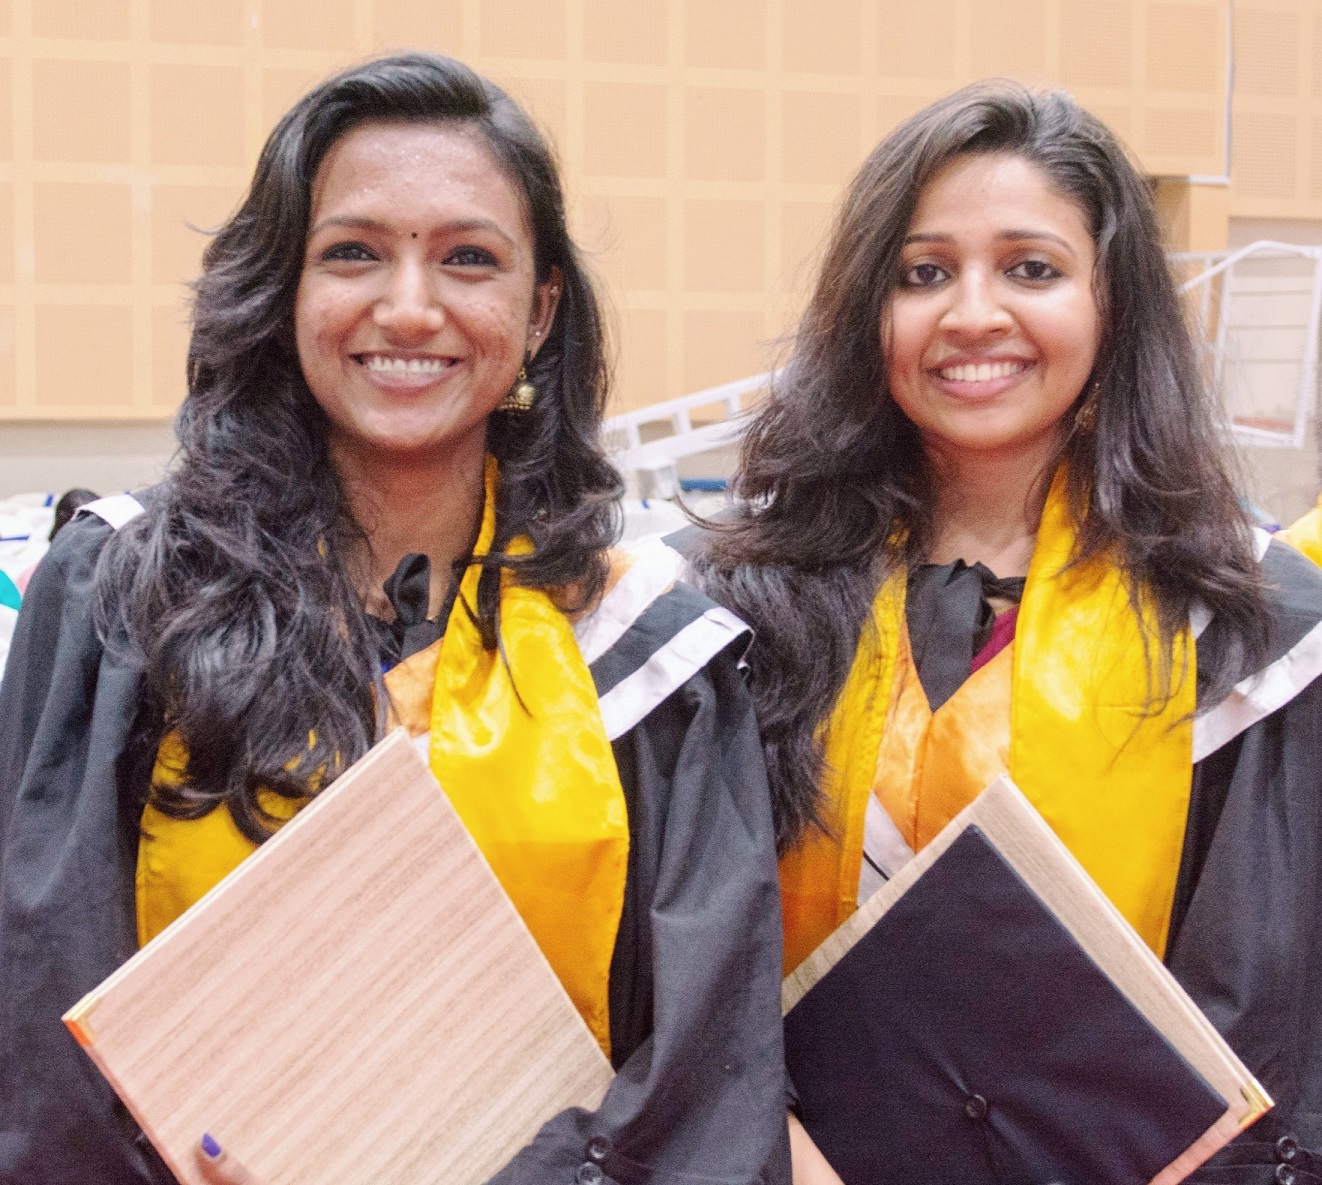 Keerthi and Devika on their Graduation Day 2019.